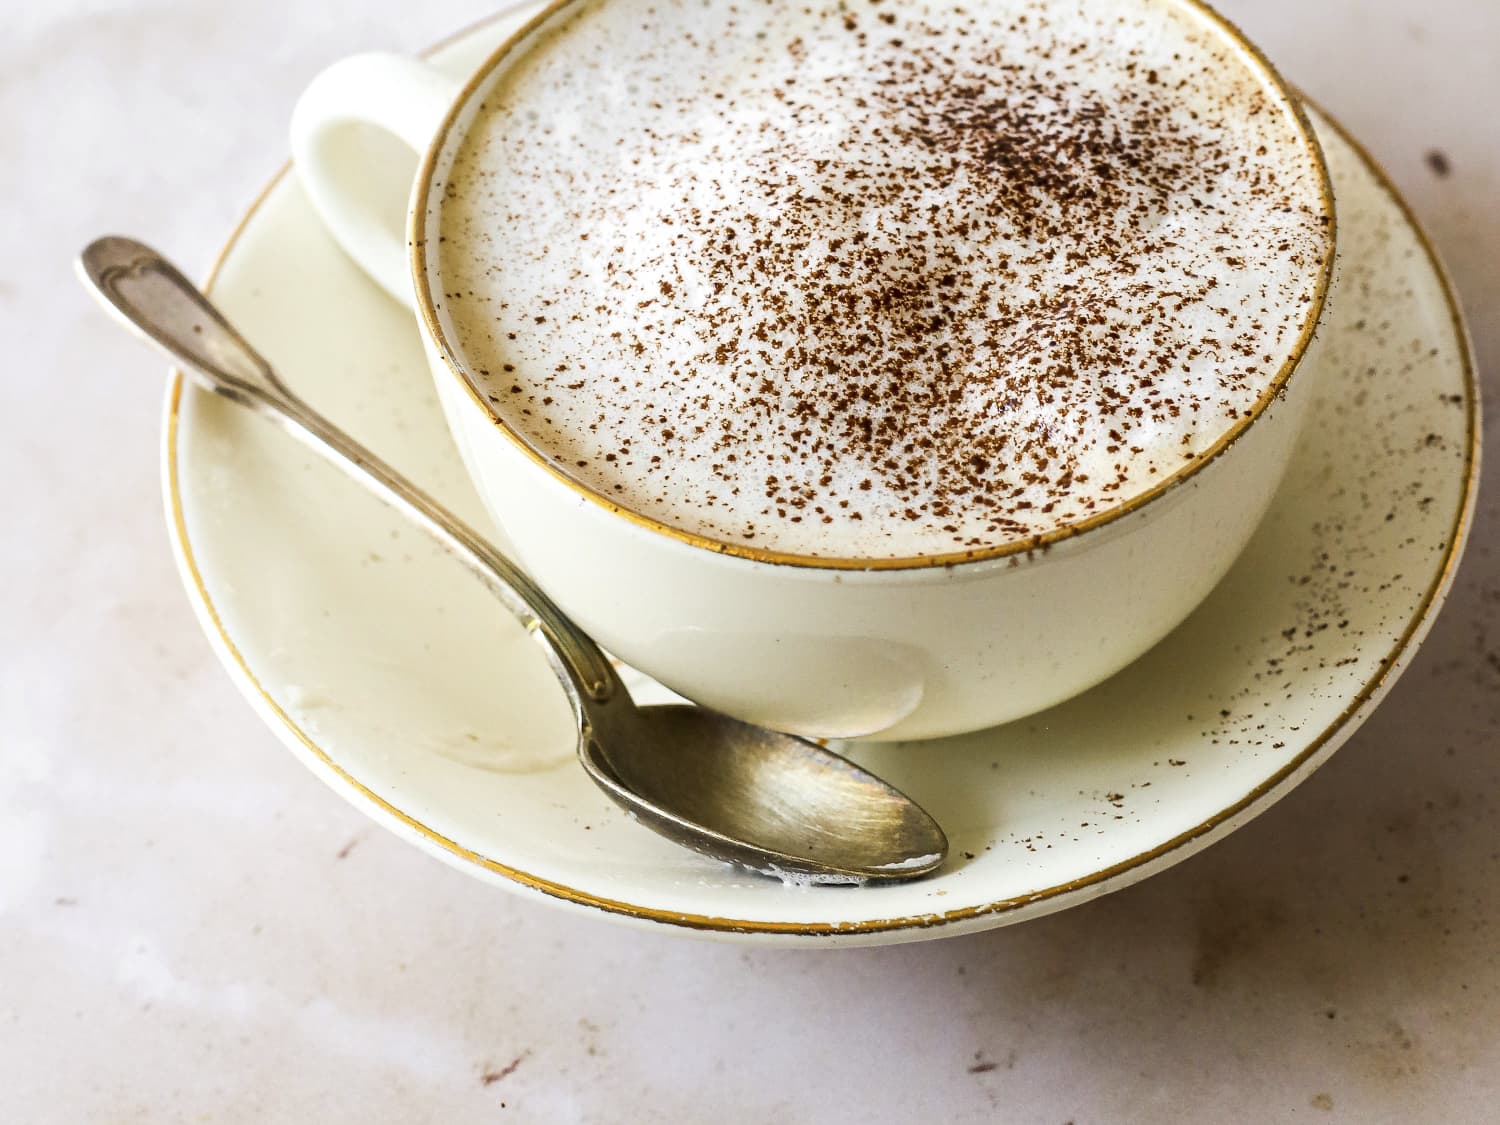 Coffee Espresso, Latte, Cappuccino And Hot Chocolate Machine